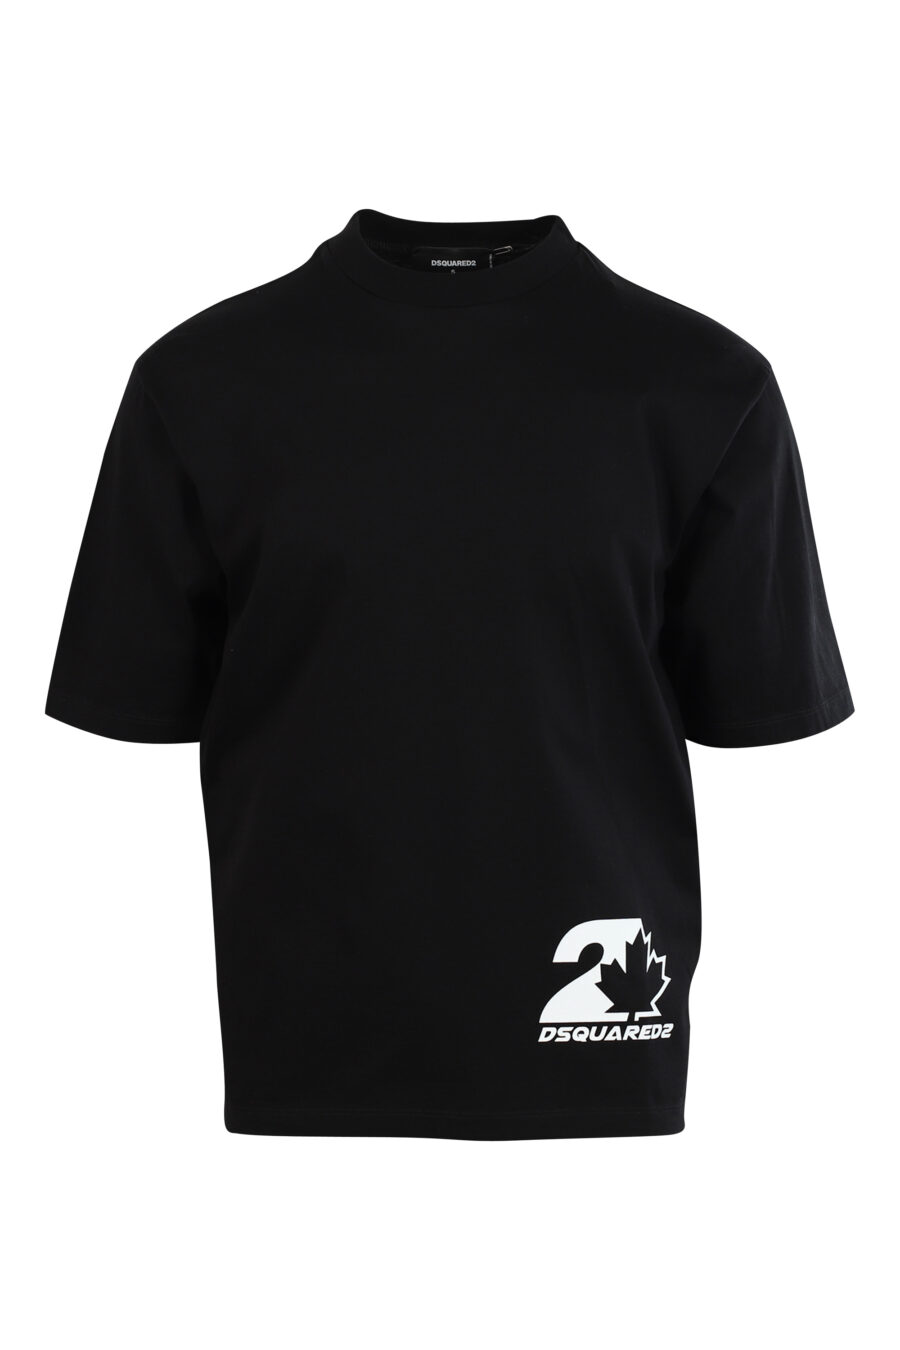 T-shirt noir "Oversized" avec logo contrasté - 8054148006570